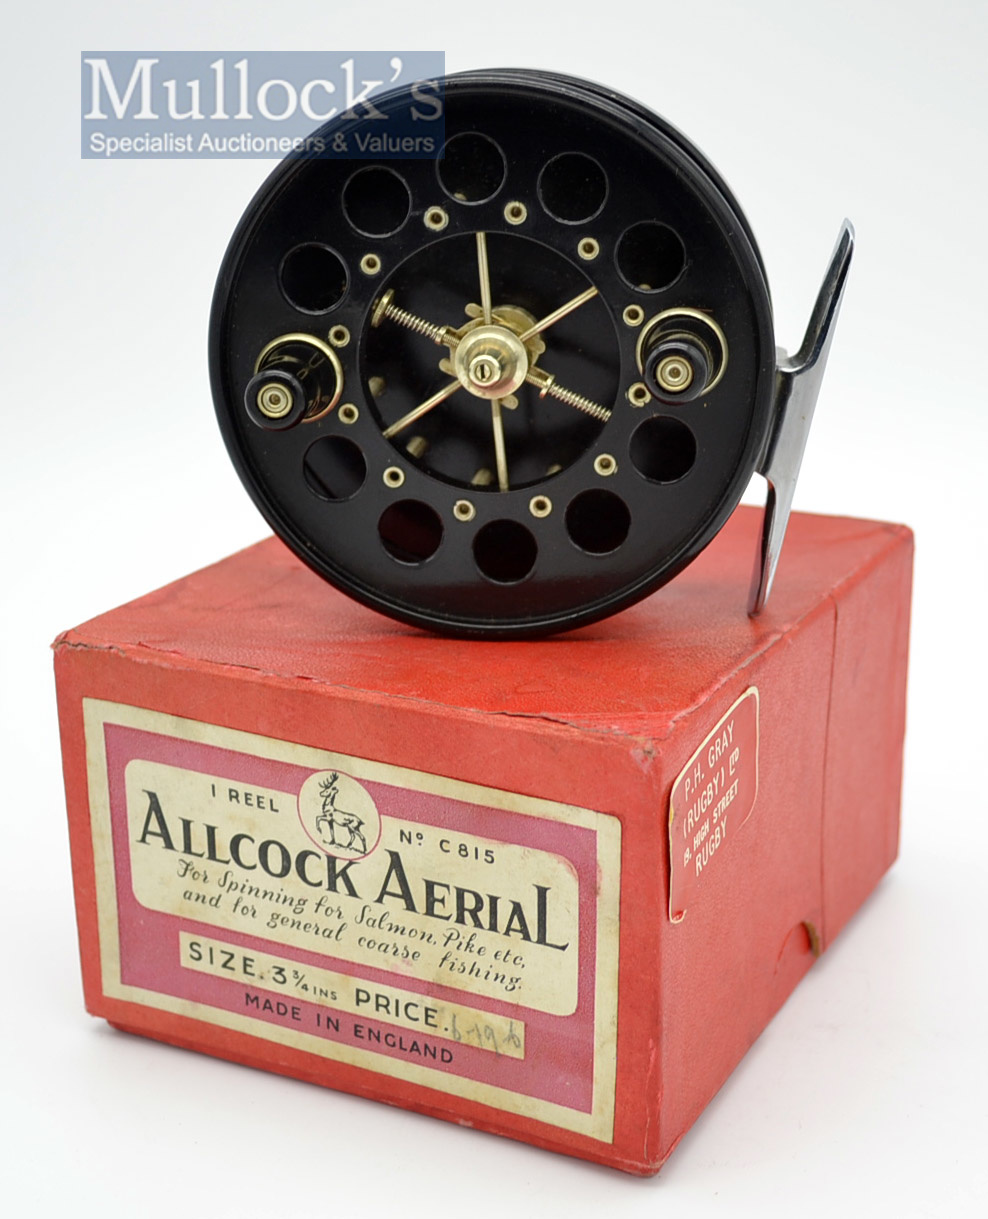 Fine Allcock Aerial Black alloy centre pin reel – unused and in makers box -3.75” dia chrome